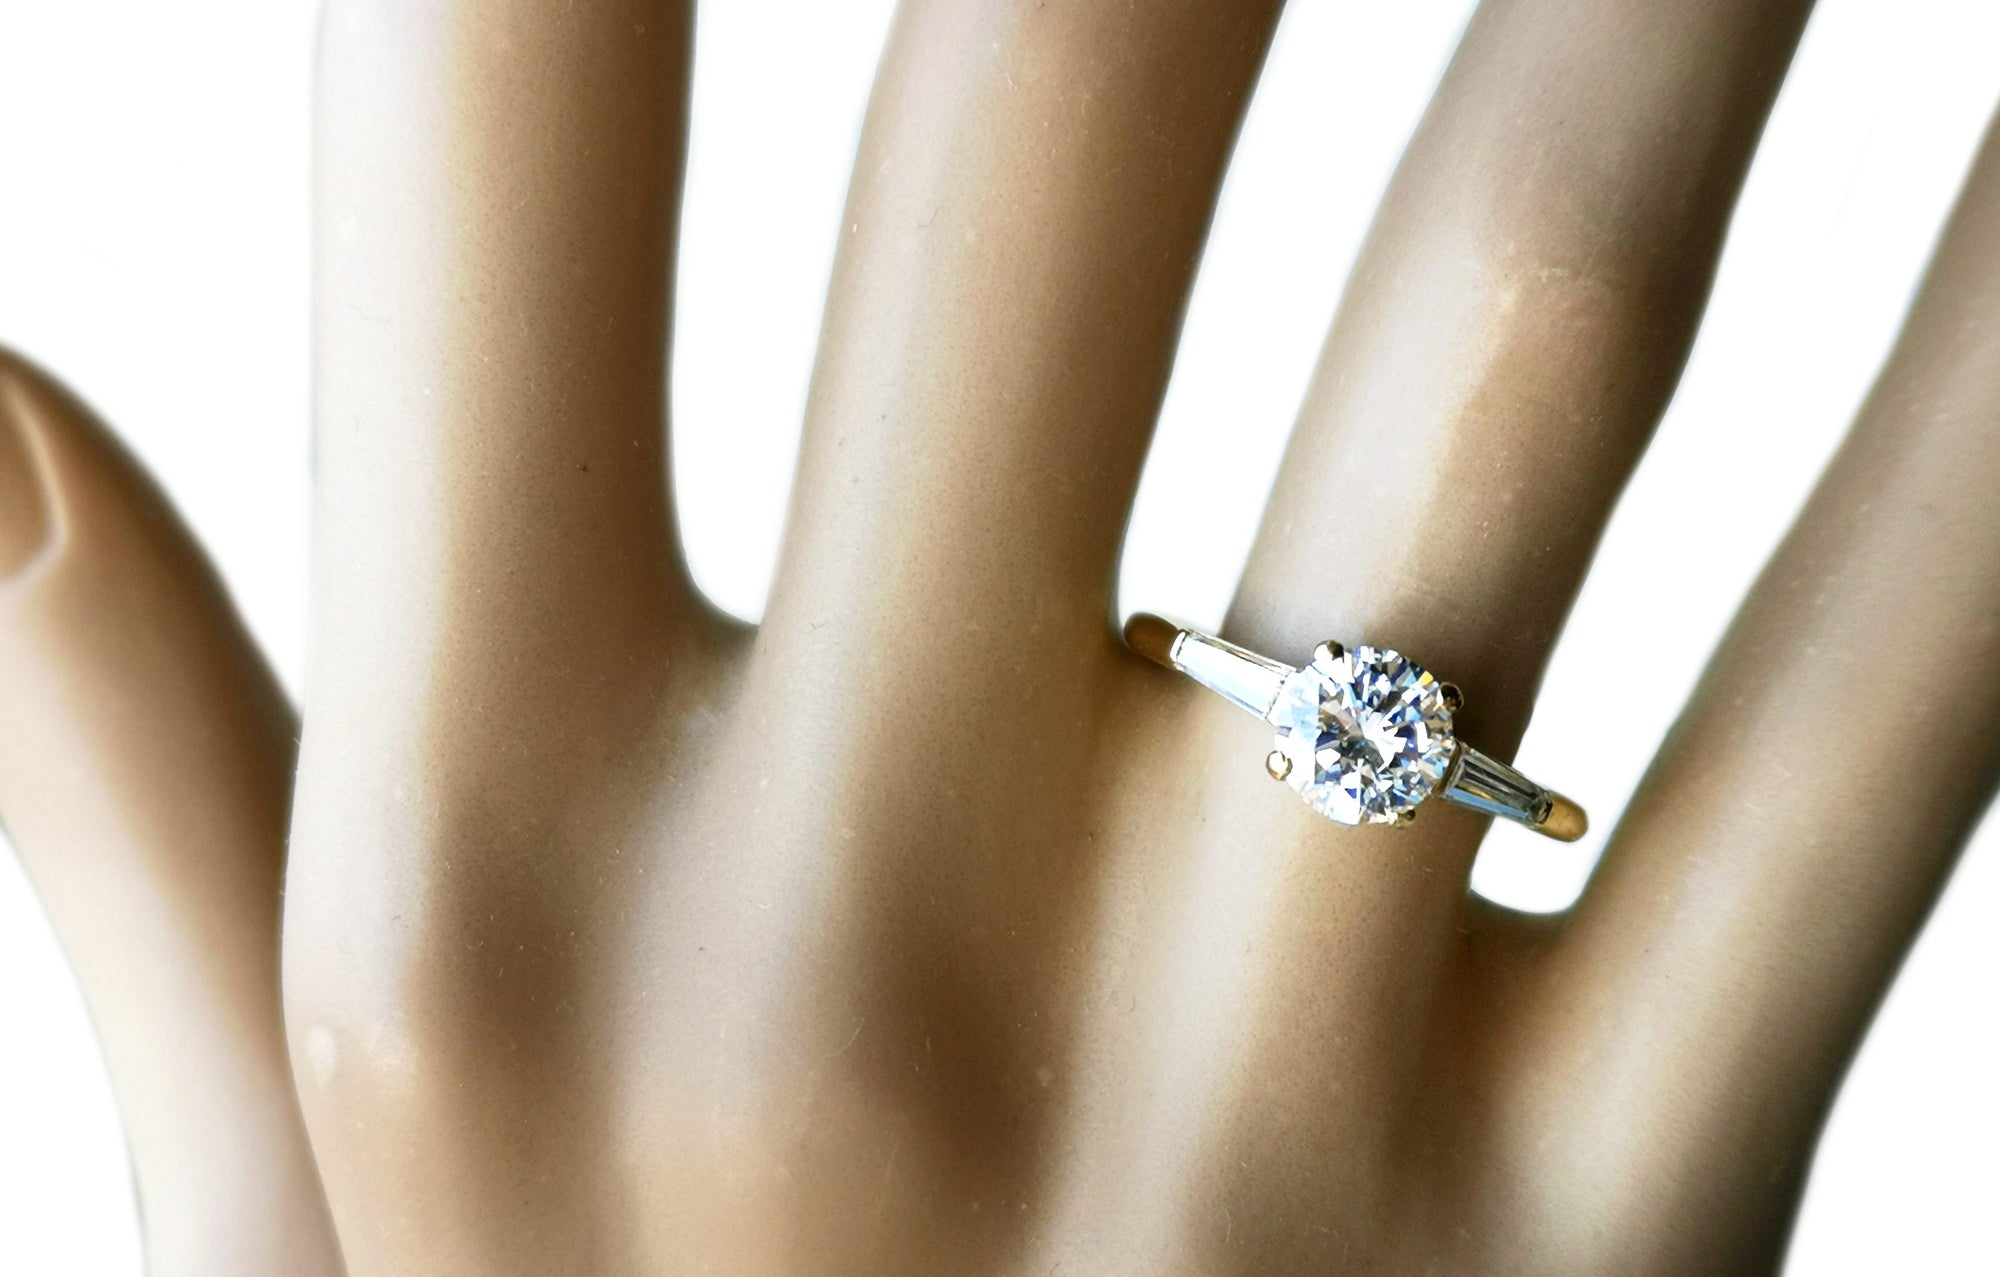 Cartier 1.01ct D/VVS2 Round Brilliant & Tapered Baguette Diamond Engagement Ring in 18K Gold on finger